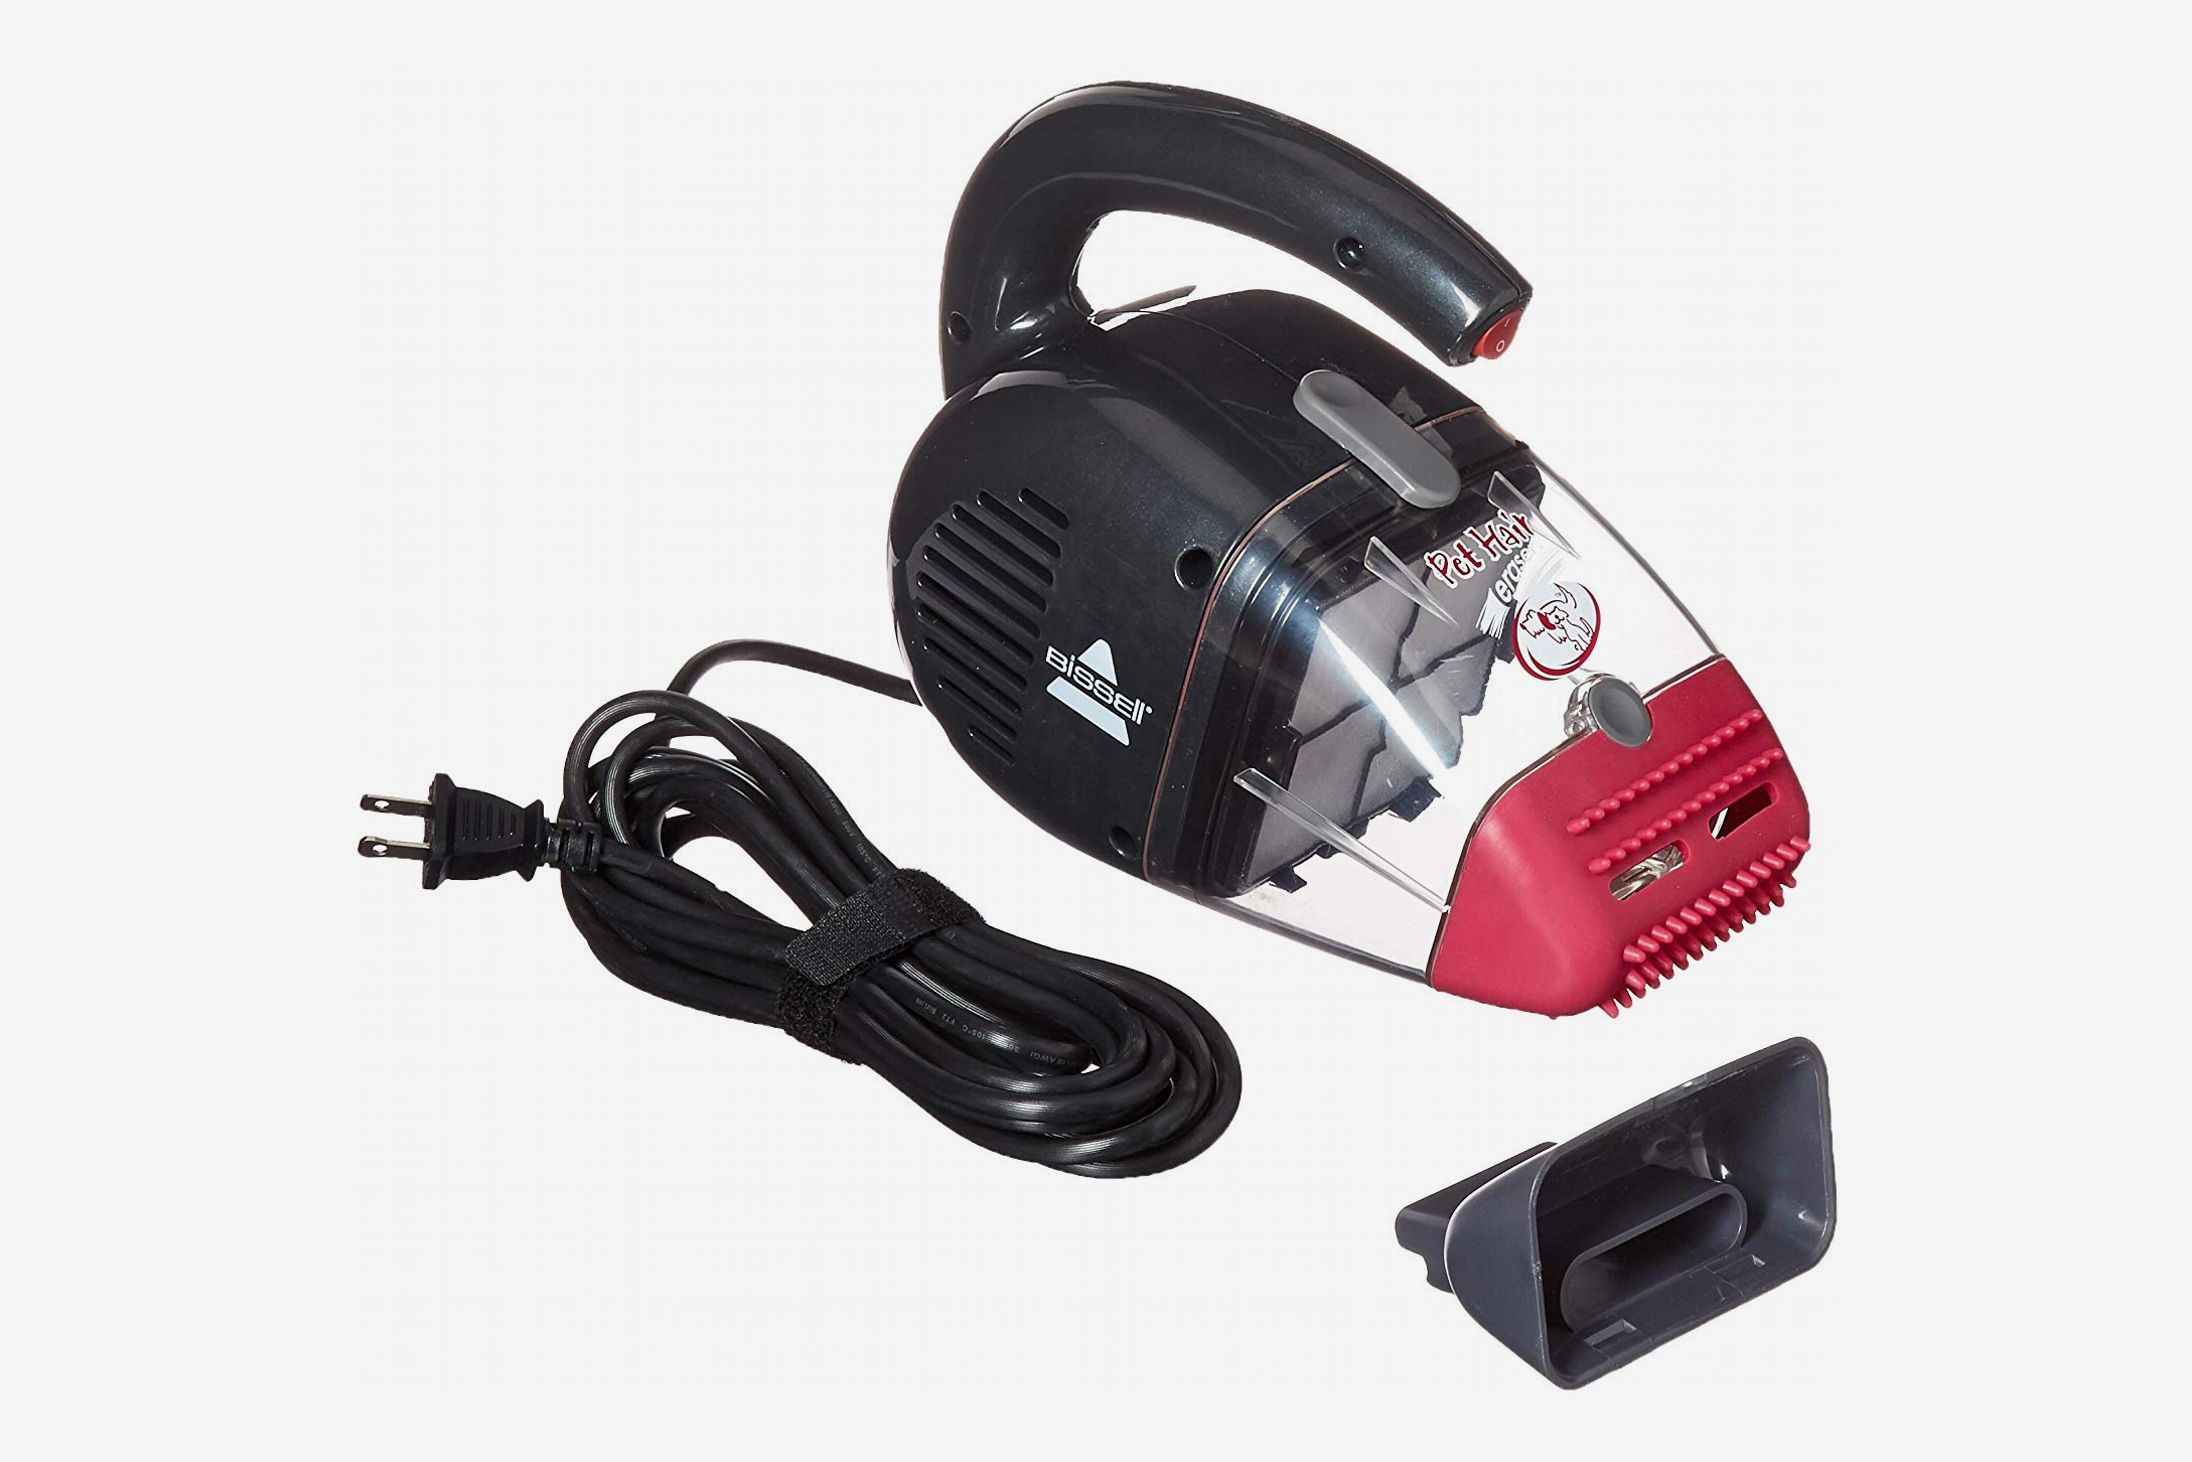 15 Best Handheld Vacuums 2022 The, Best Cordless Vacuum For Hardwood Floors And Carpet Pet Hair